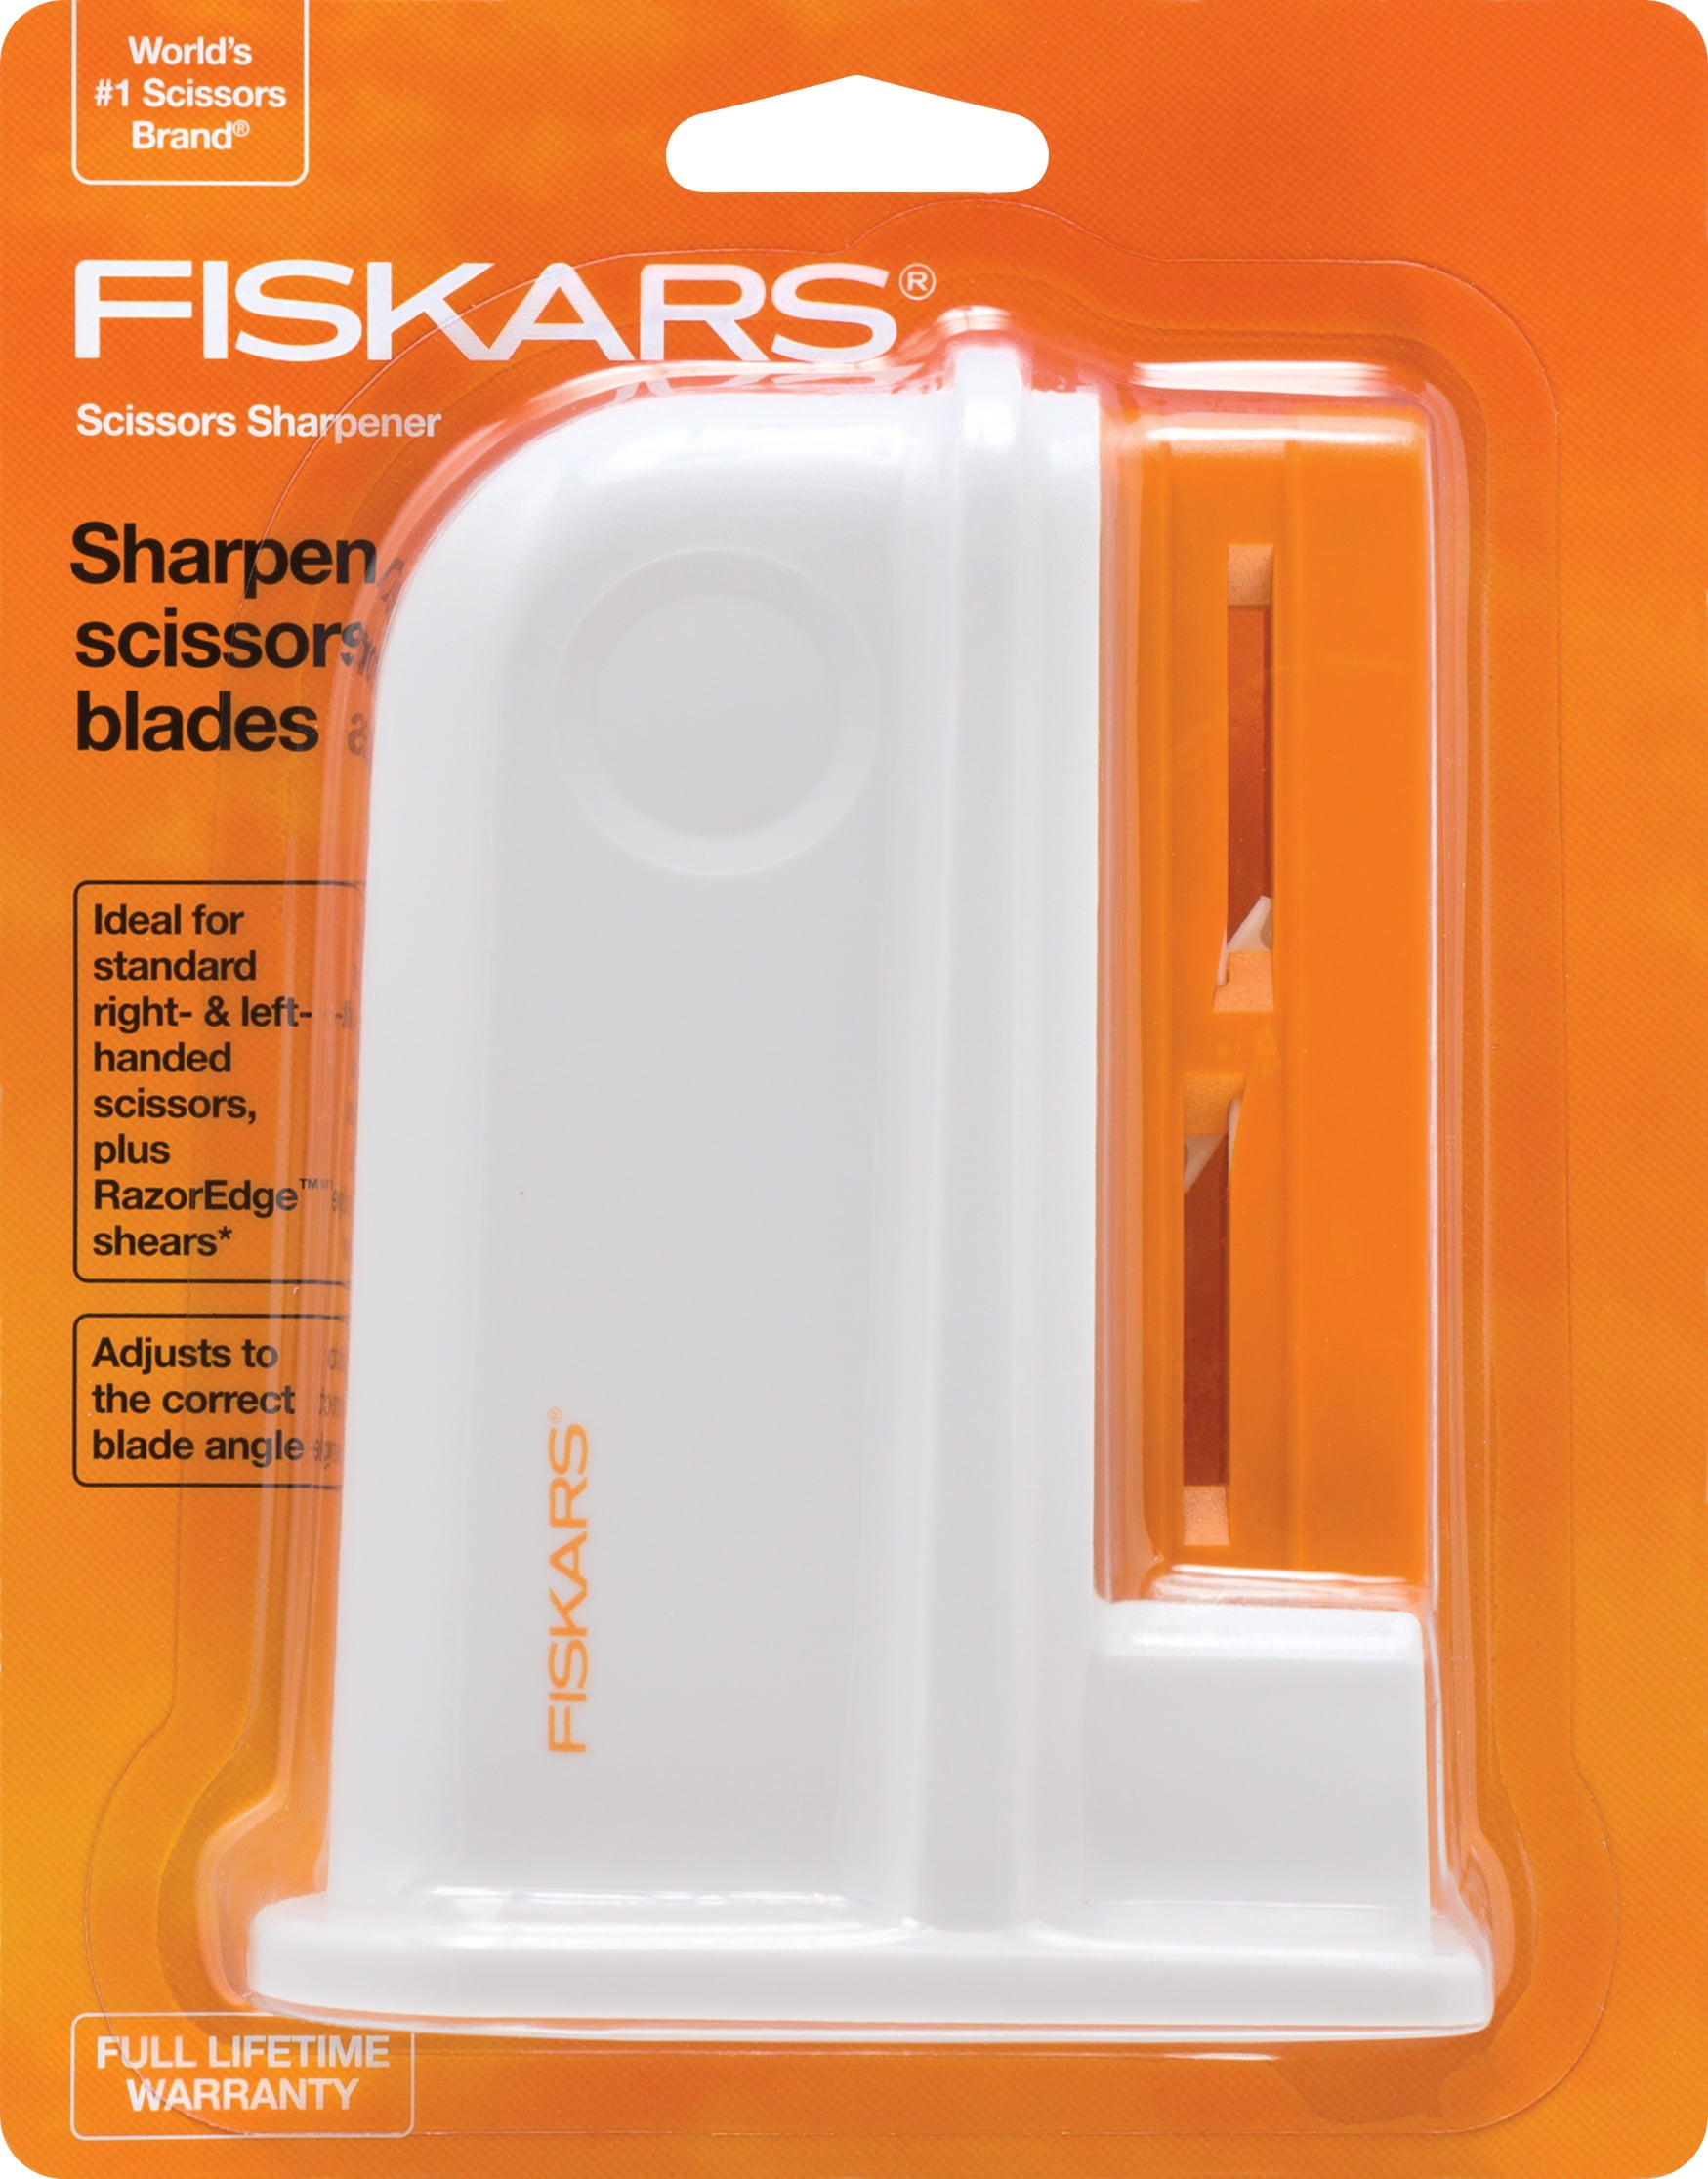 Fiskars Amplify RazorEdge Fabric Scissors 10- - 2349232